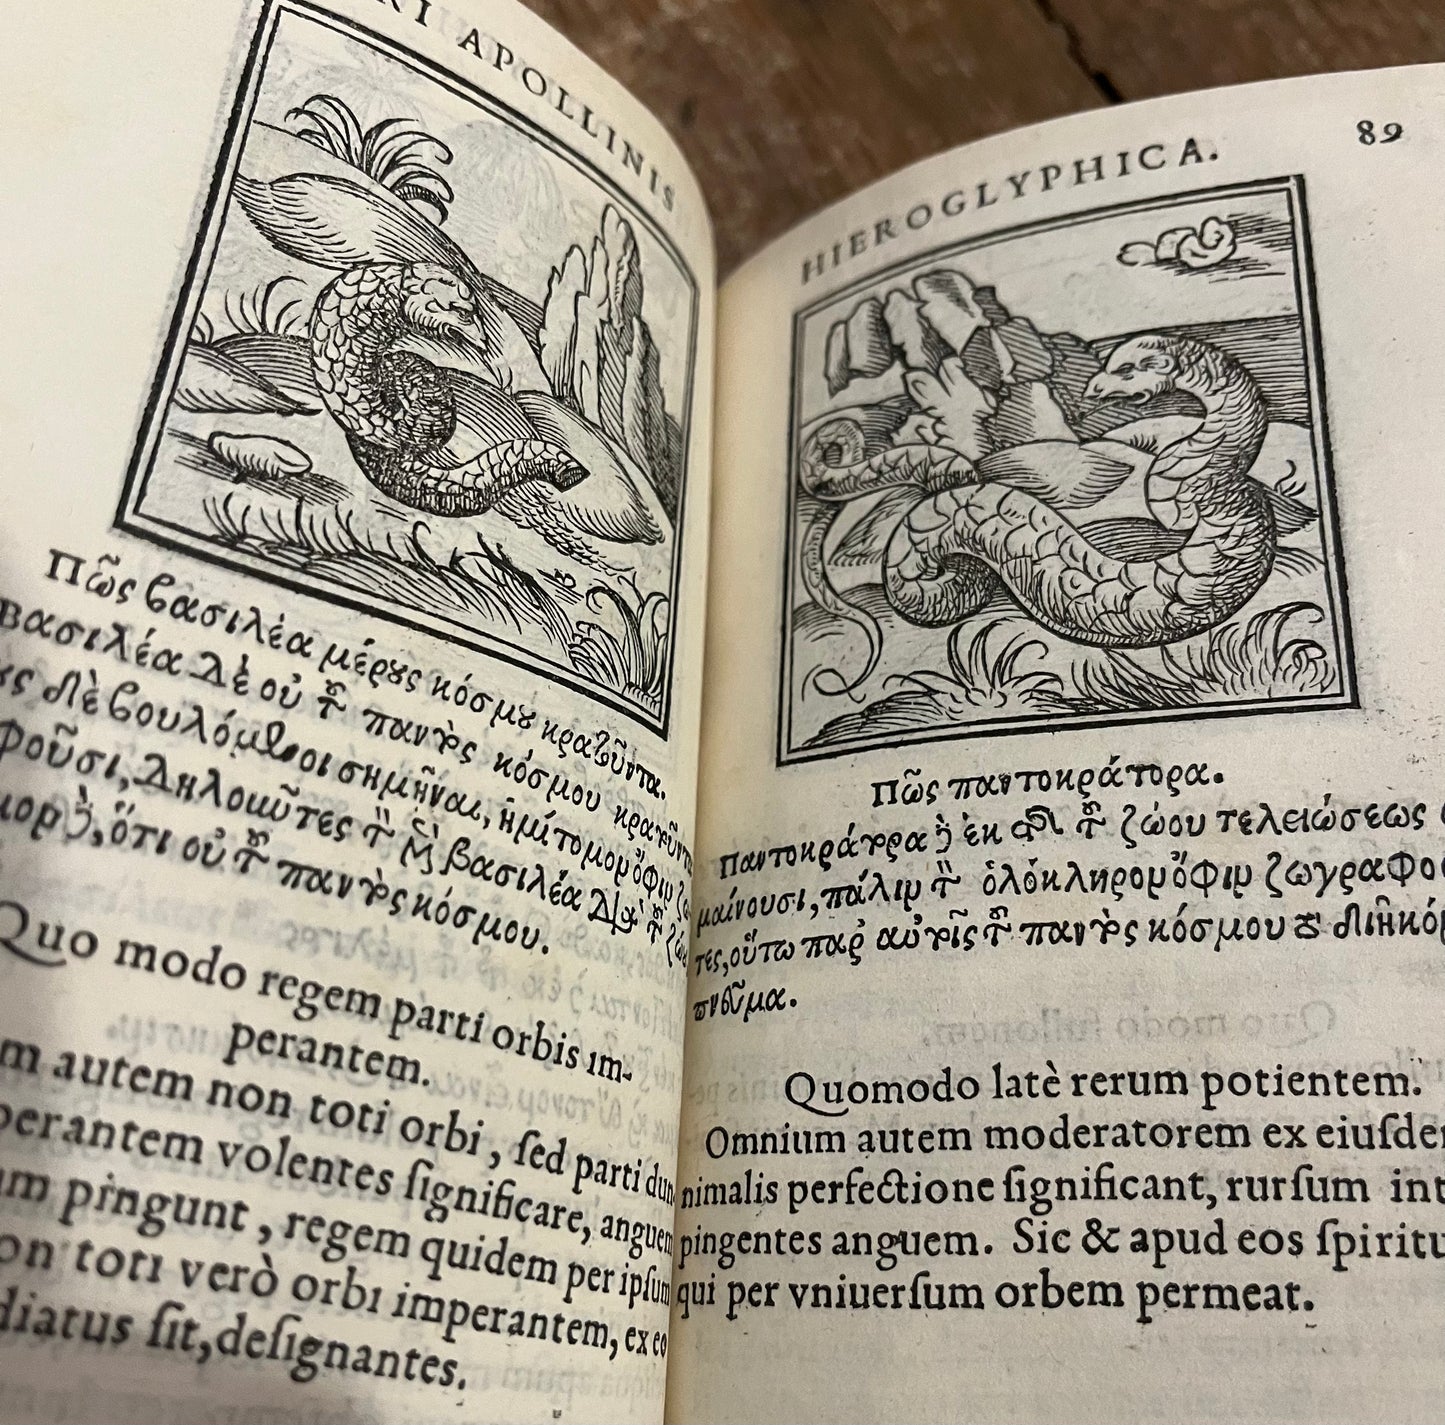 Earliest description of Hieroglyphics, Salamanders, Elephants etc - "Sacris Notis & sculpturis libri duo" - The Hieroglyphics of Horapollo - 1551